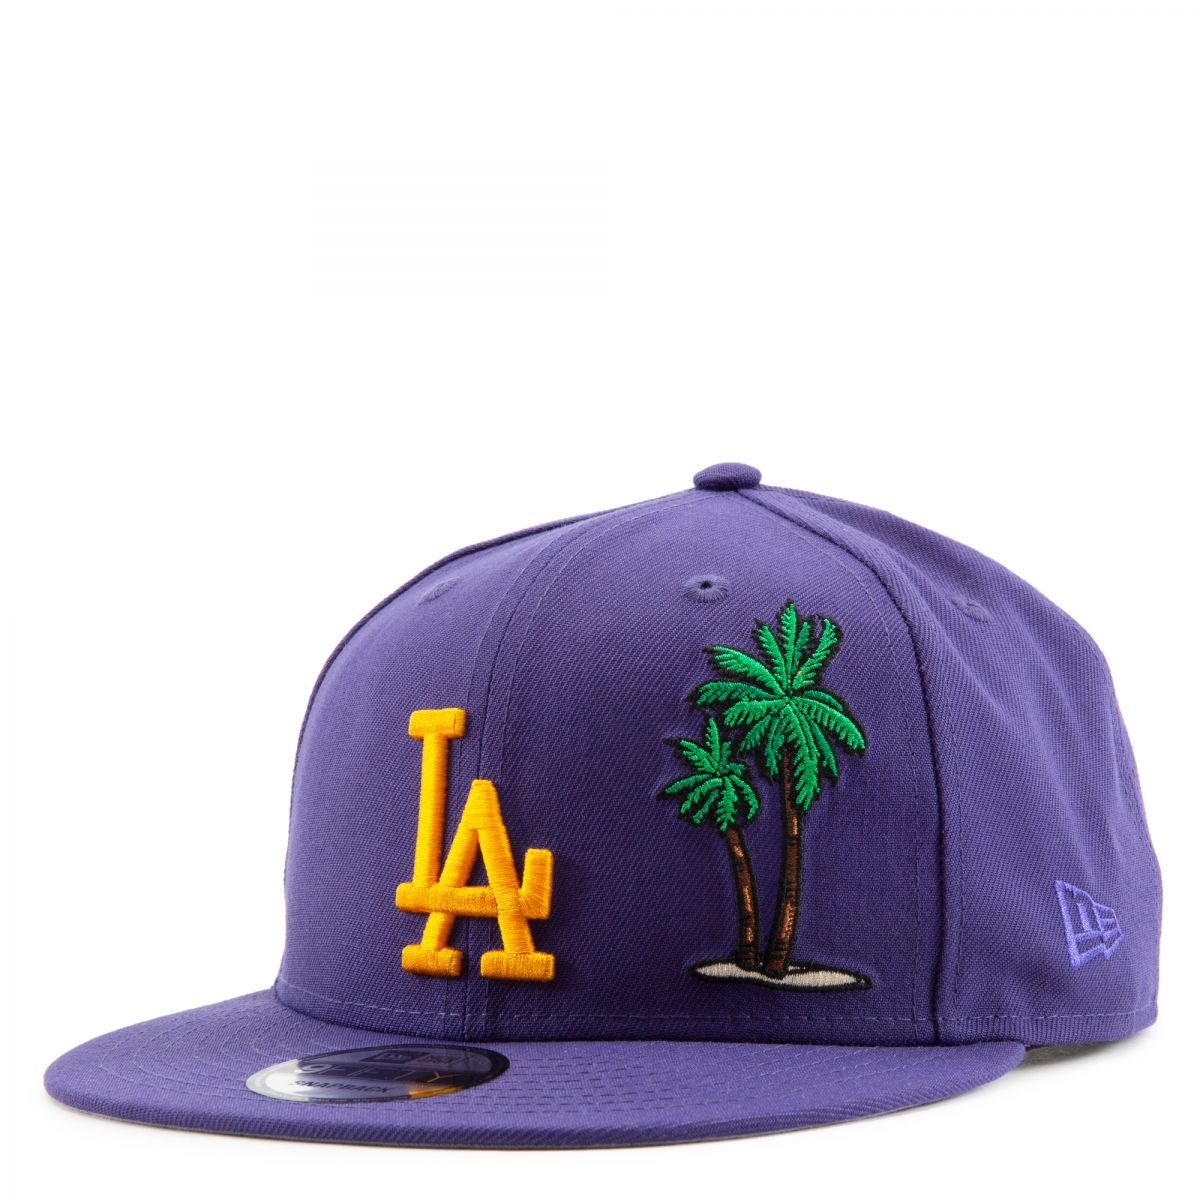 New Era Los Angeles Dodgers LA Fitted Hat 7 5/8 Black White Lebron Kobe  Lakers 